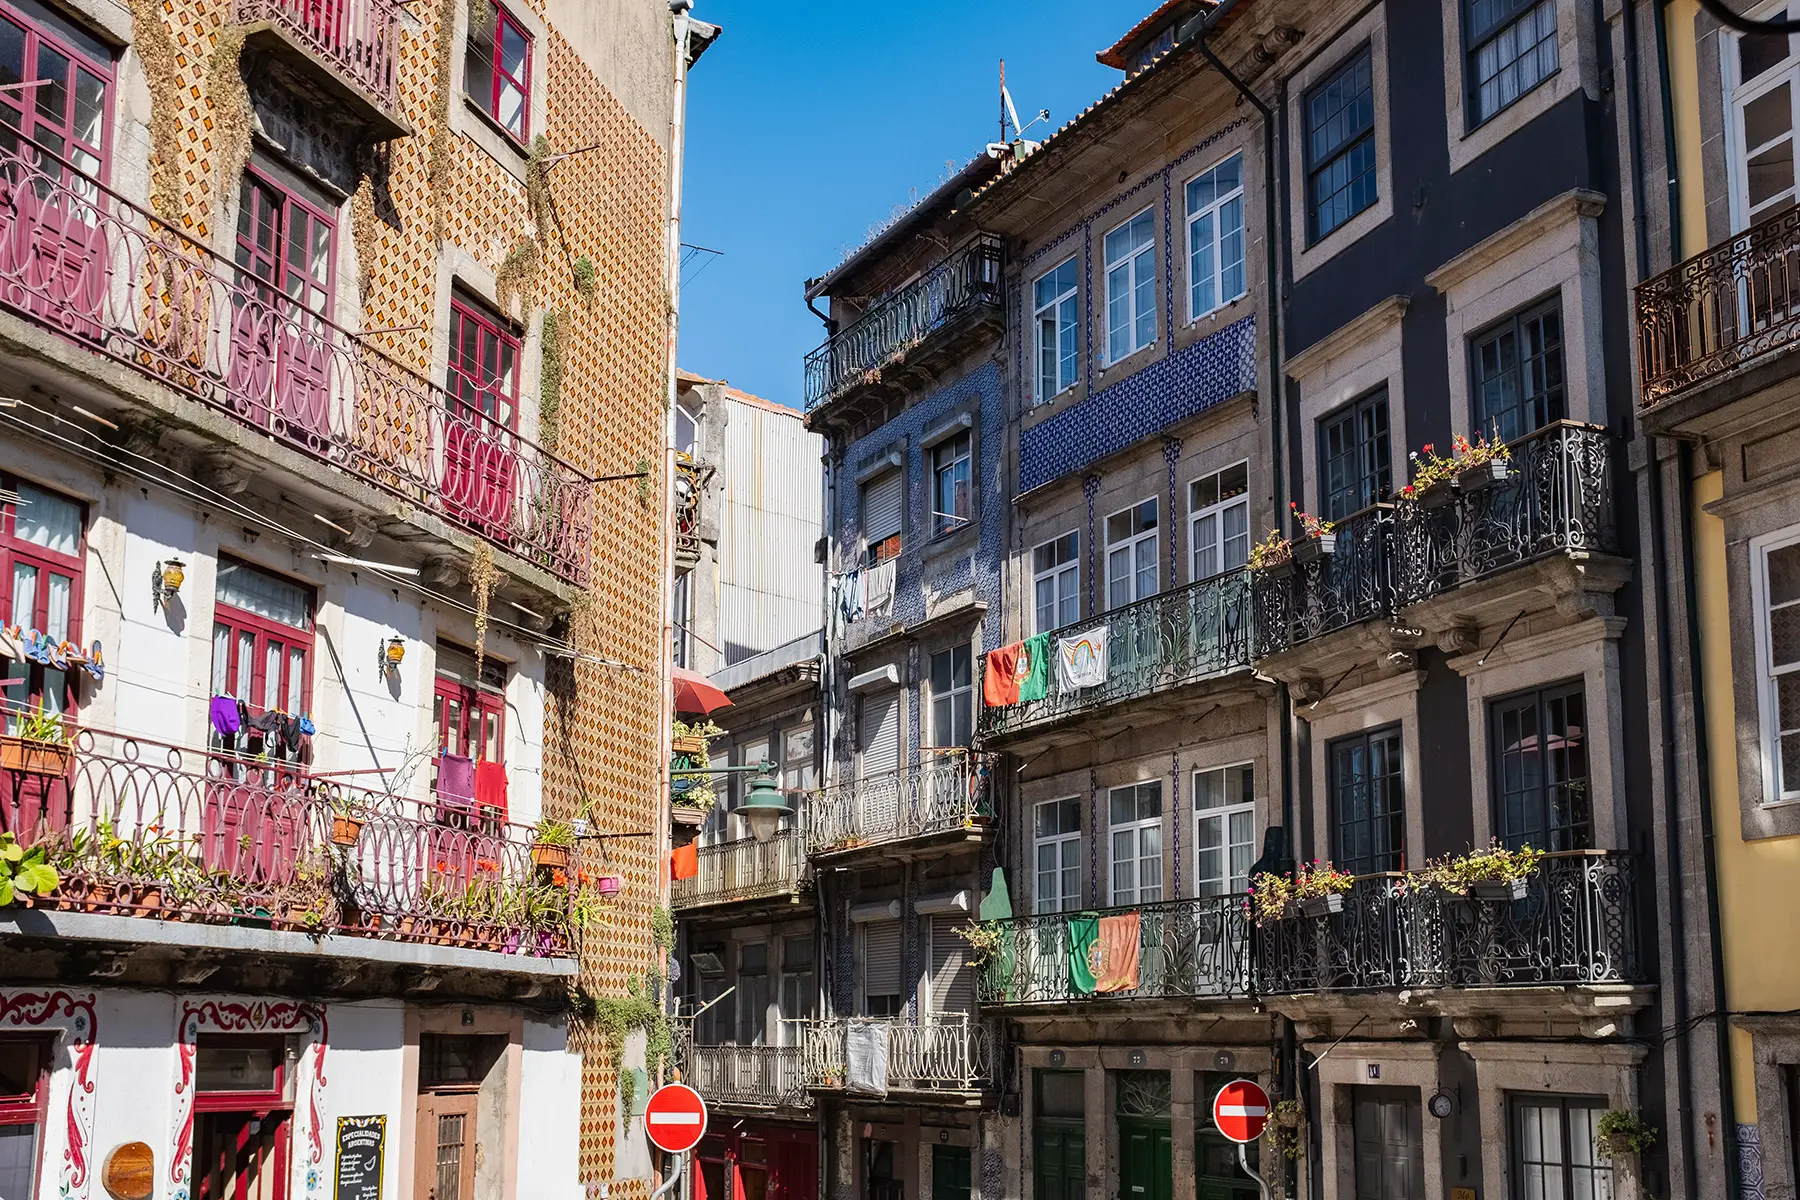 Colorful facades with balconies in Porto